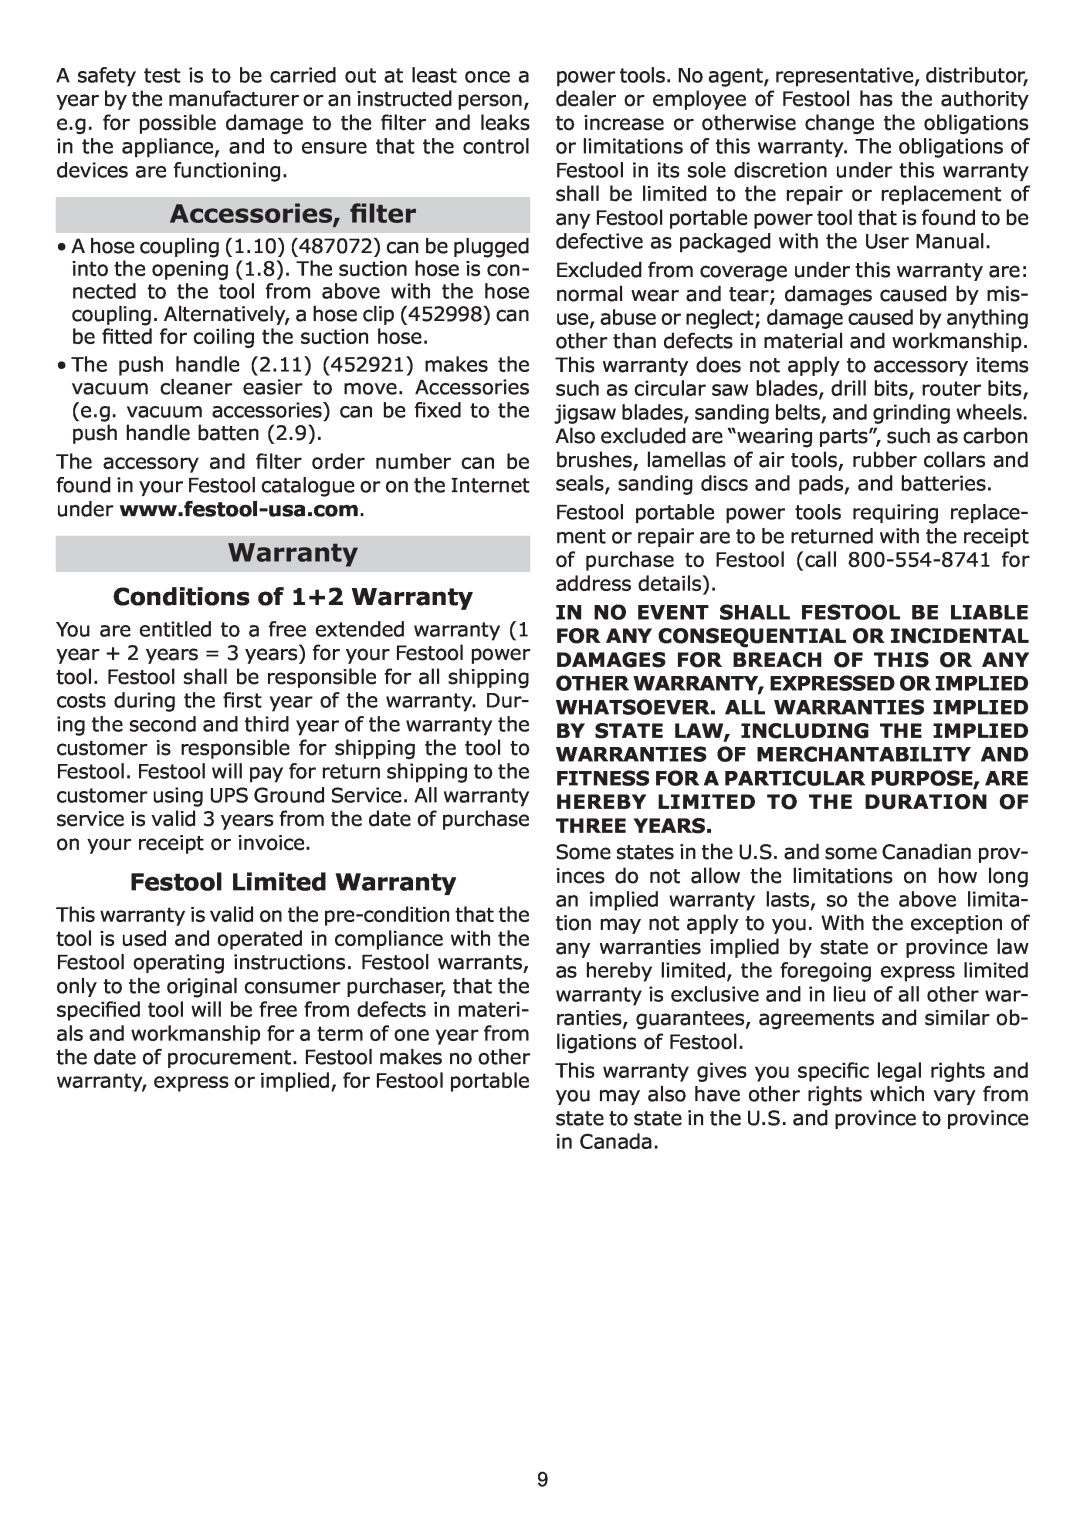 Festool CT 22 E HEPA, CT 33 E HEPA Accessories, ﬁlter, Conditions of 1+2 Warranty, Festool Limited Warranty 